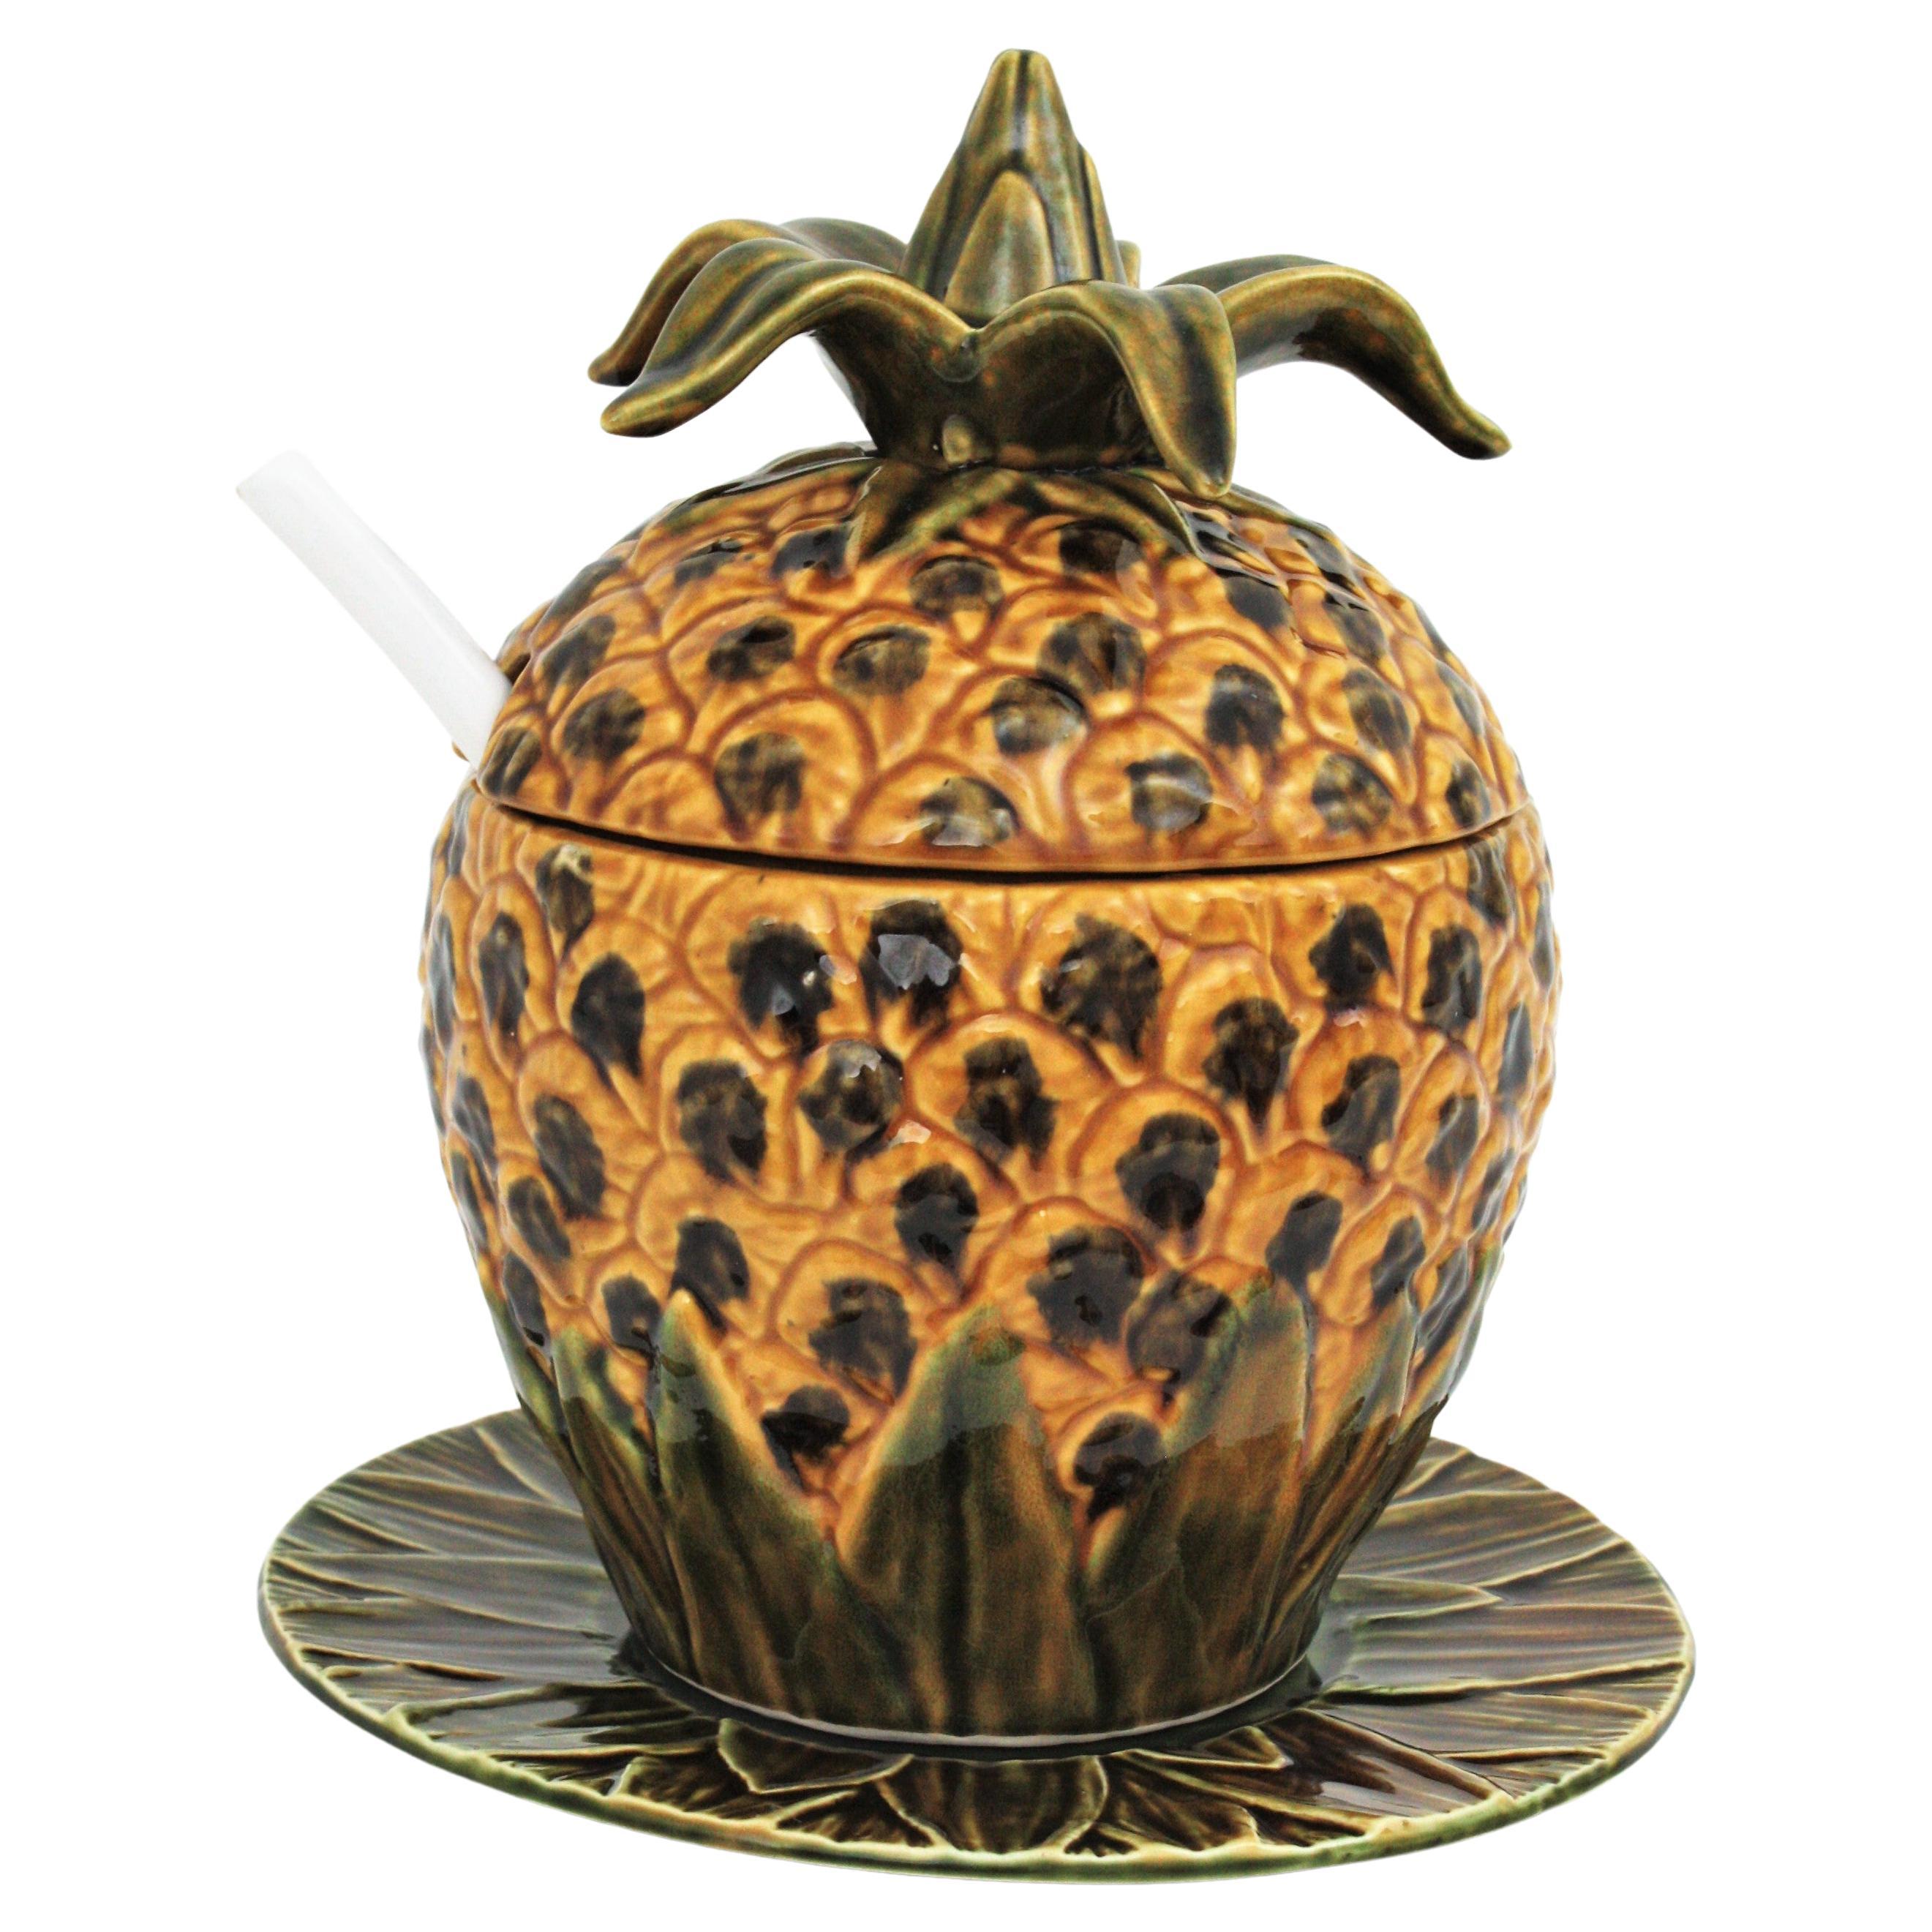 Midcentury Pineapple XL Tureen Centerpiece in Glazed Ceramic, 1960s For Sale